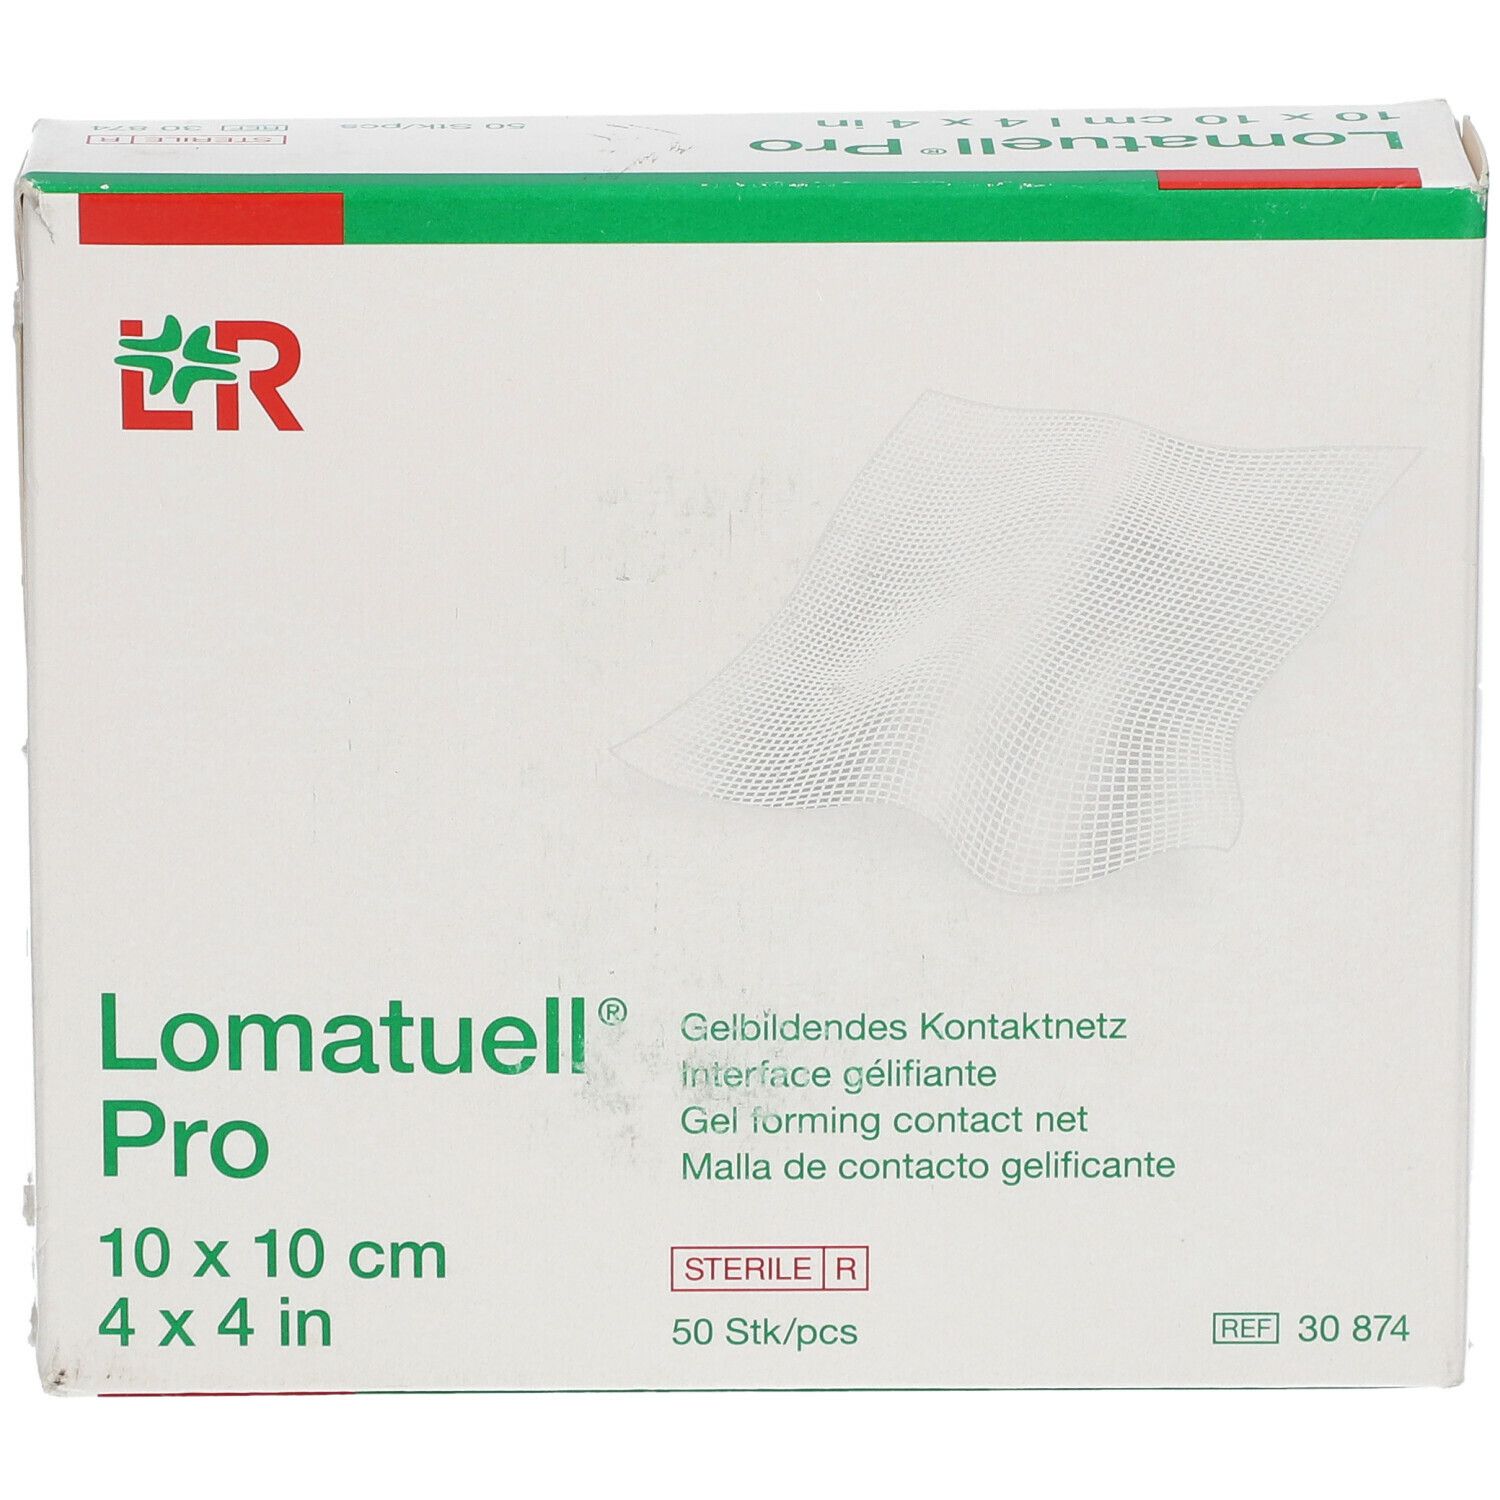 Lomatuell Pro 10 x 10cm 30874